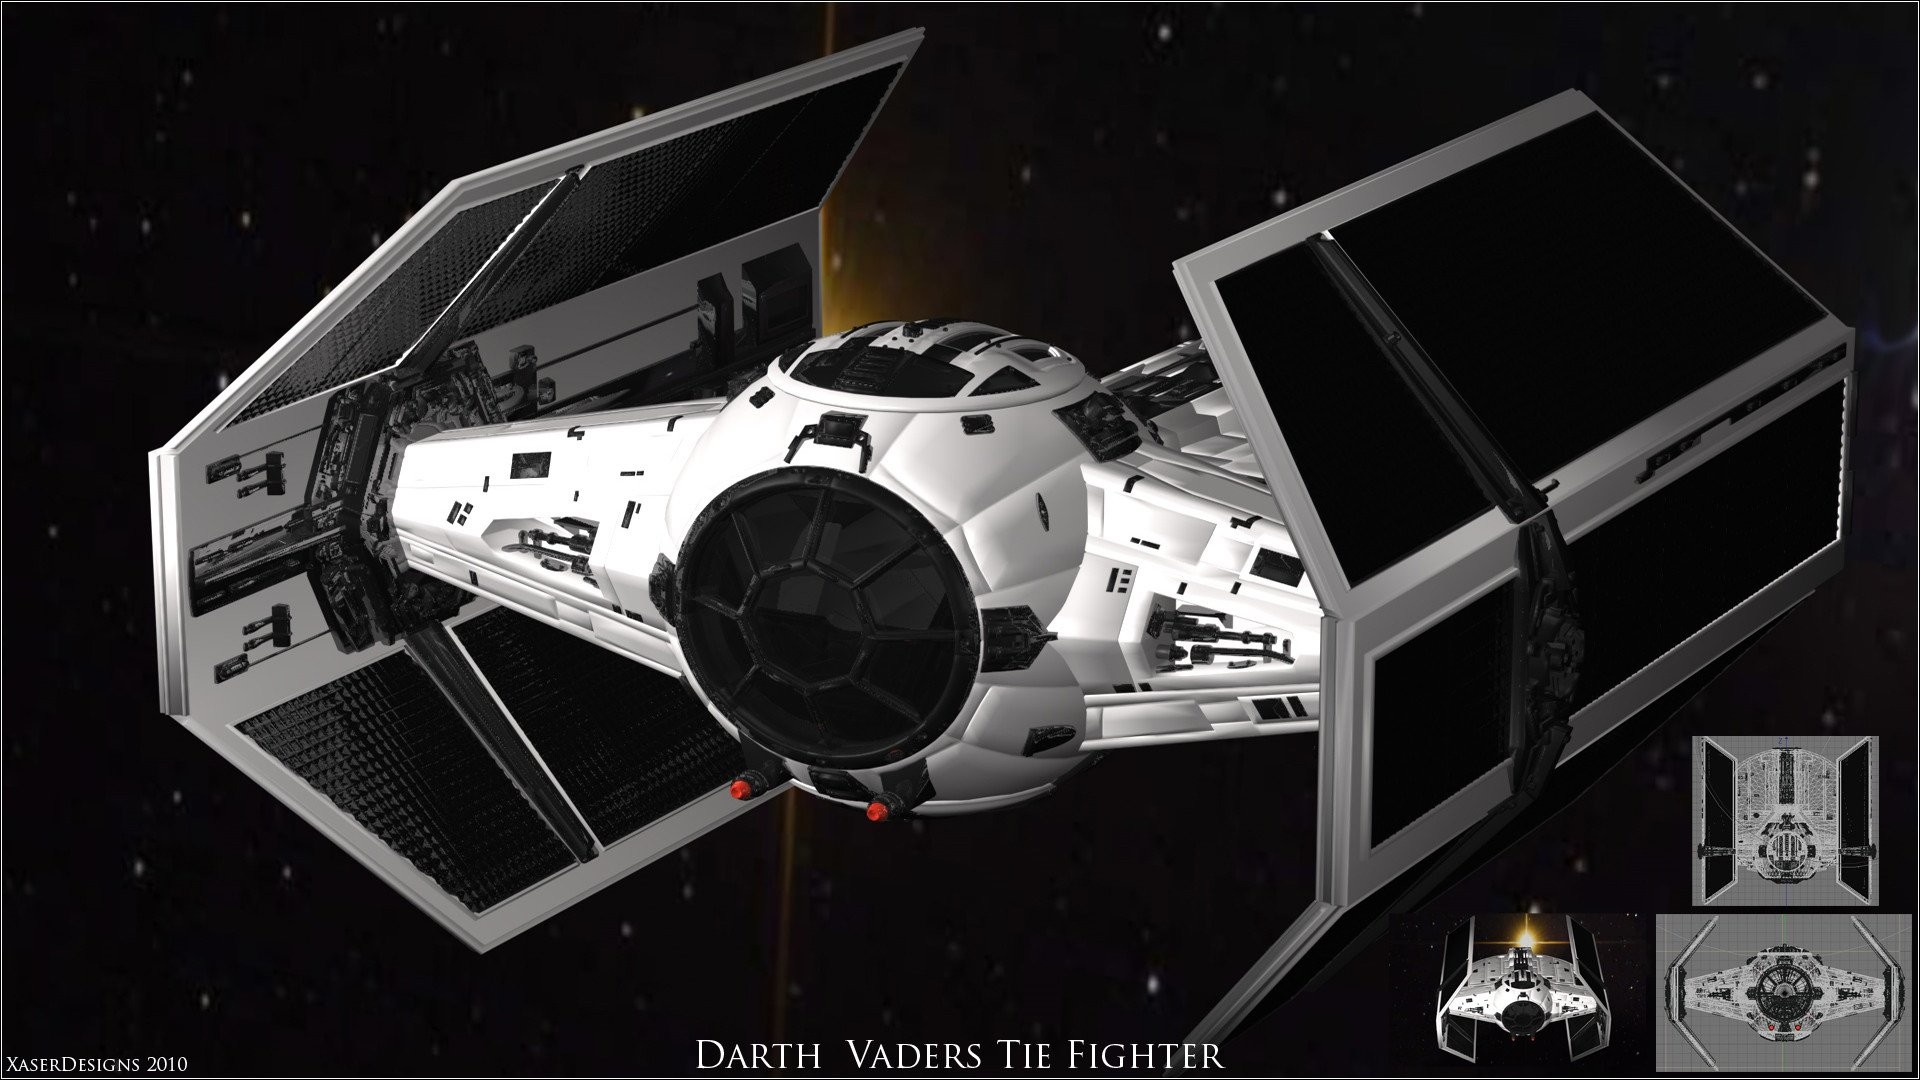 TIE FIGHTER star wars futuristic spaceship space sci fi wallpaper 811257 WallpaperUP